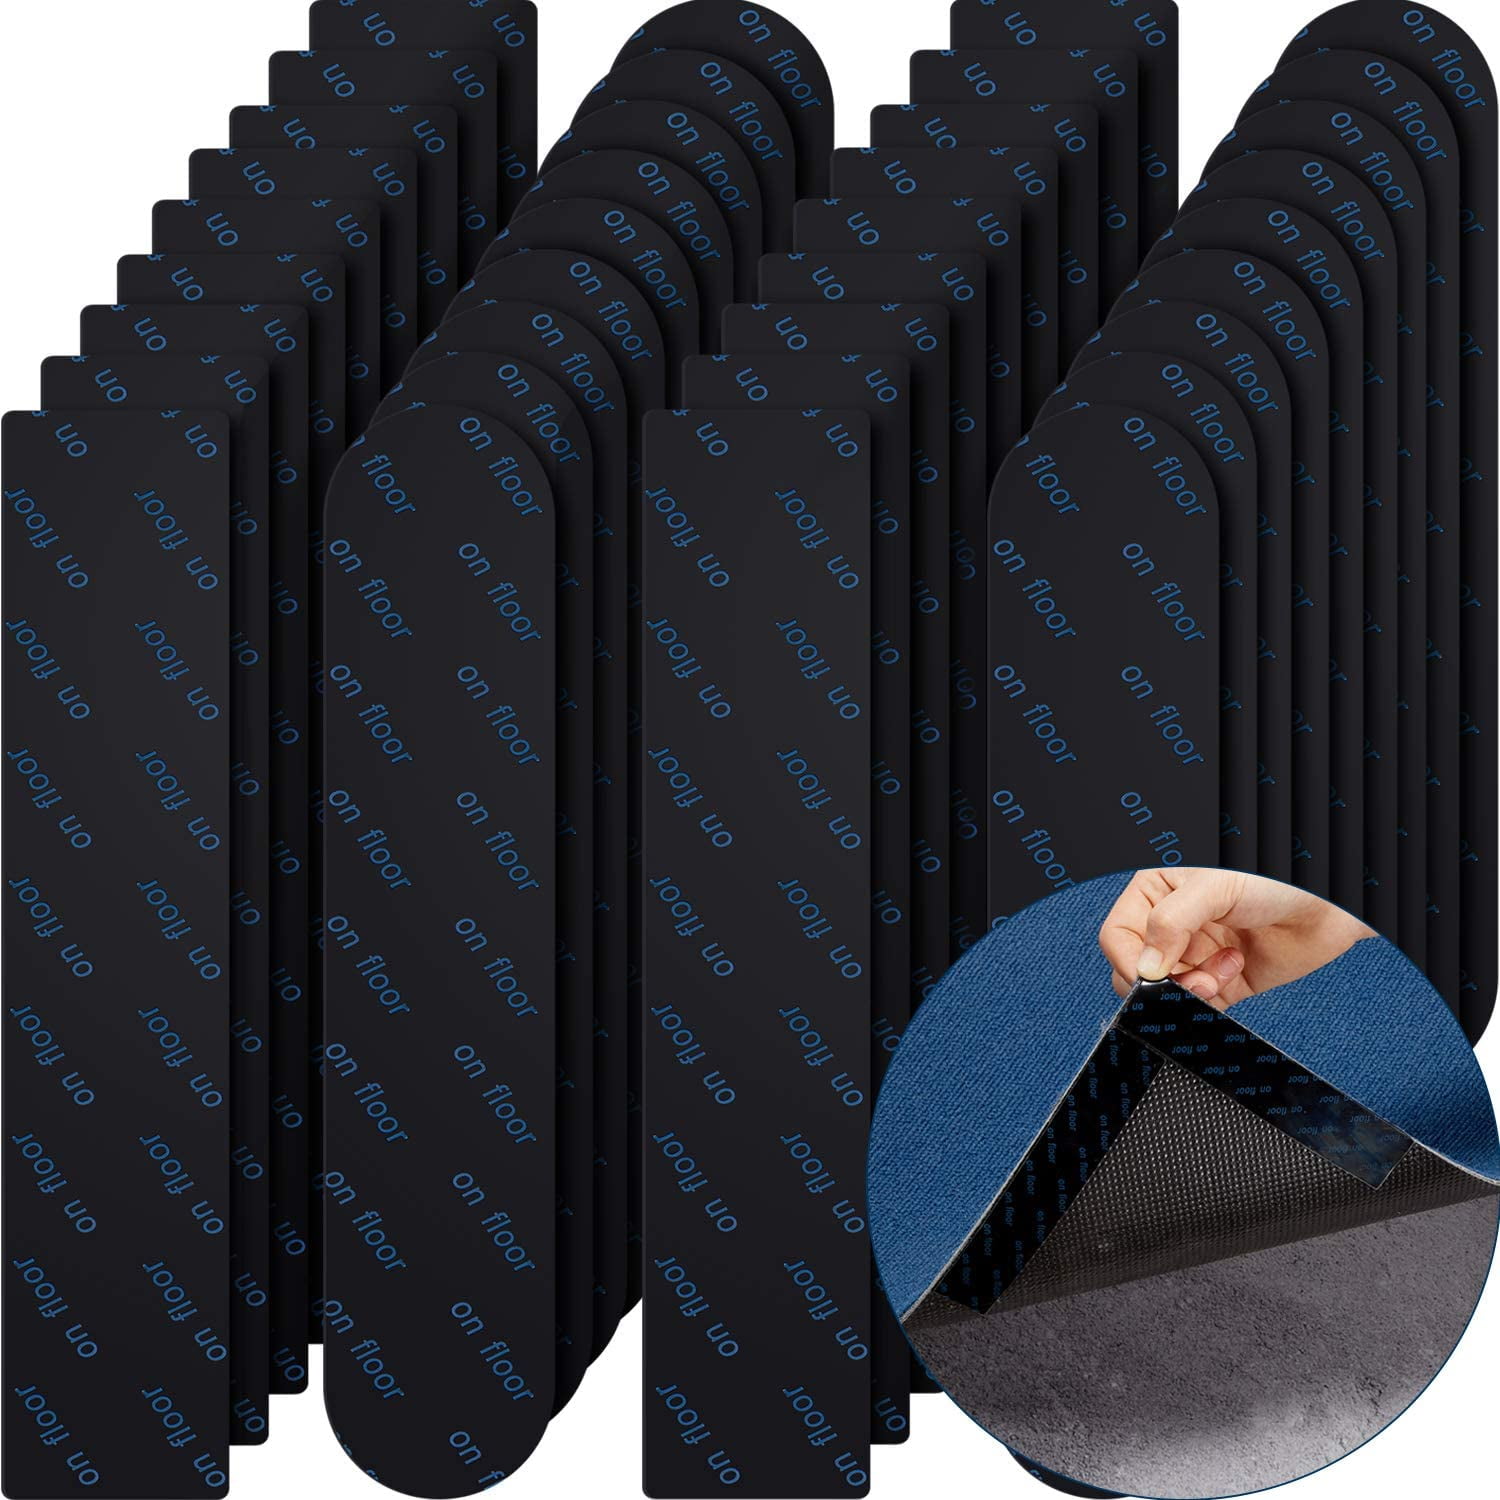 32 Pieces Rug Grippers Anti Slip Rug Non-slip Corner Carpet Gripper  Washable Rusable Rugs Tape Anti Slip Carpet Stickers For Area Rugs (black